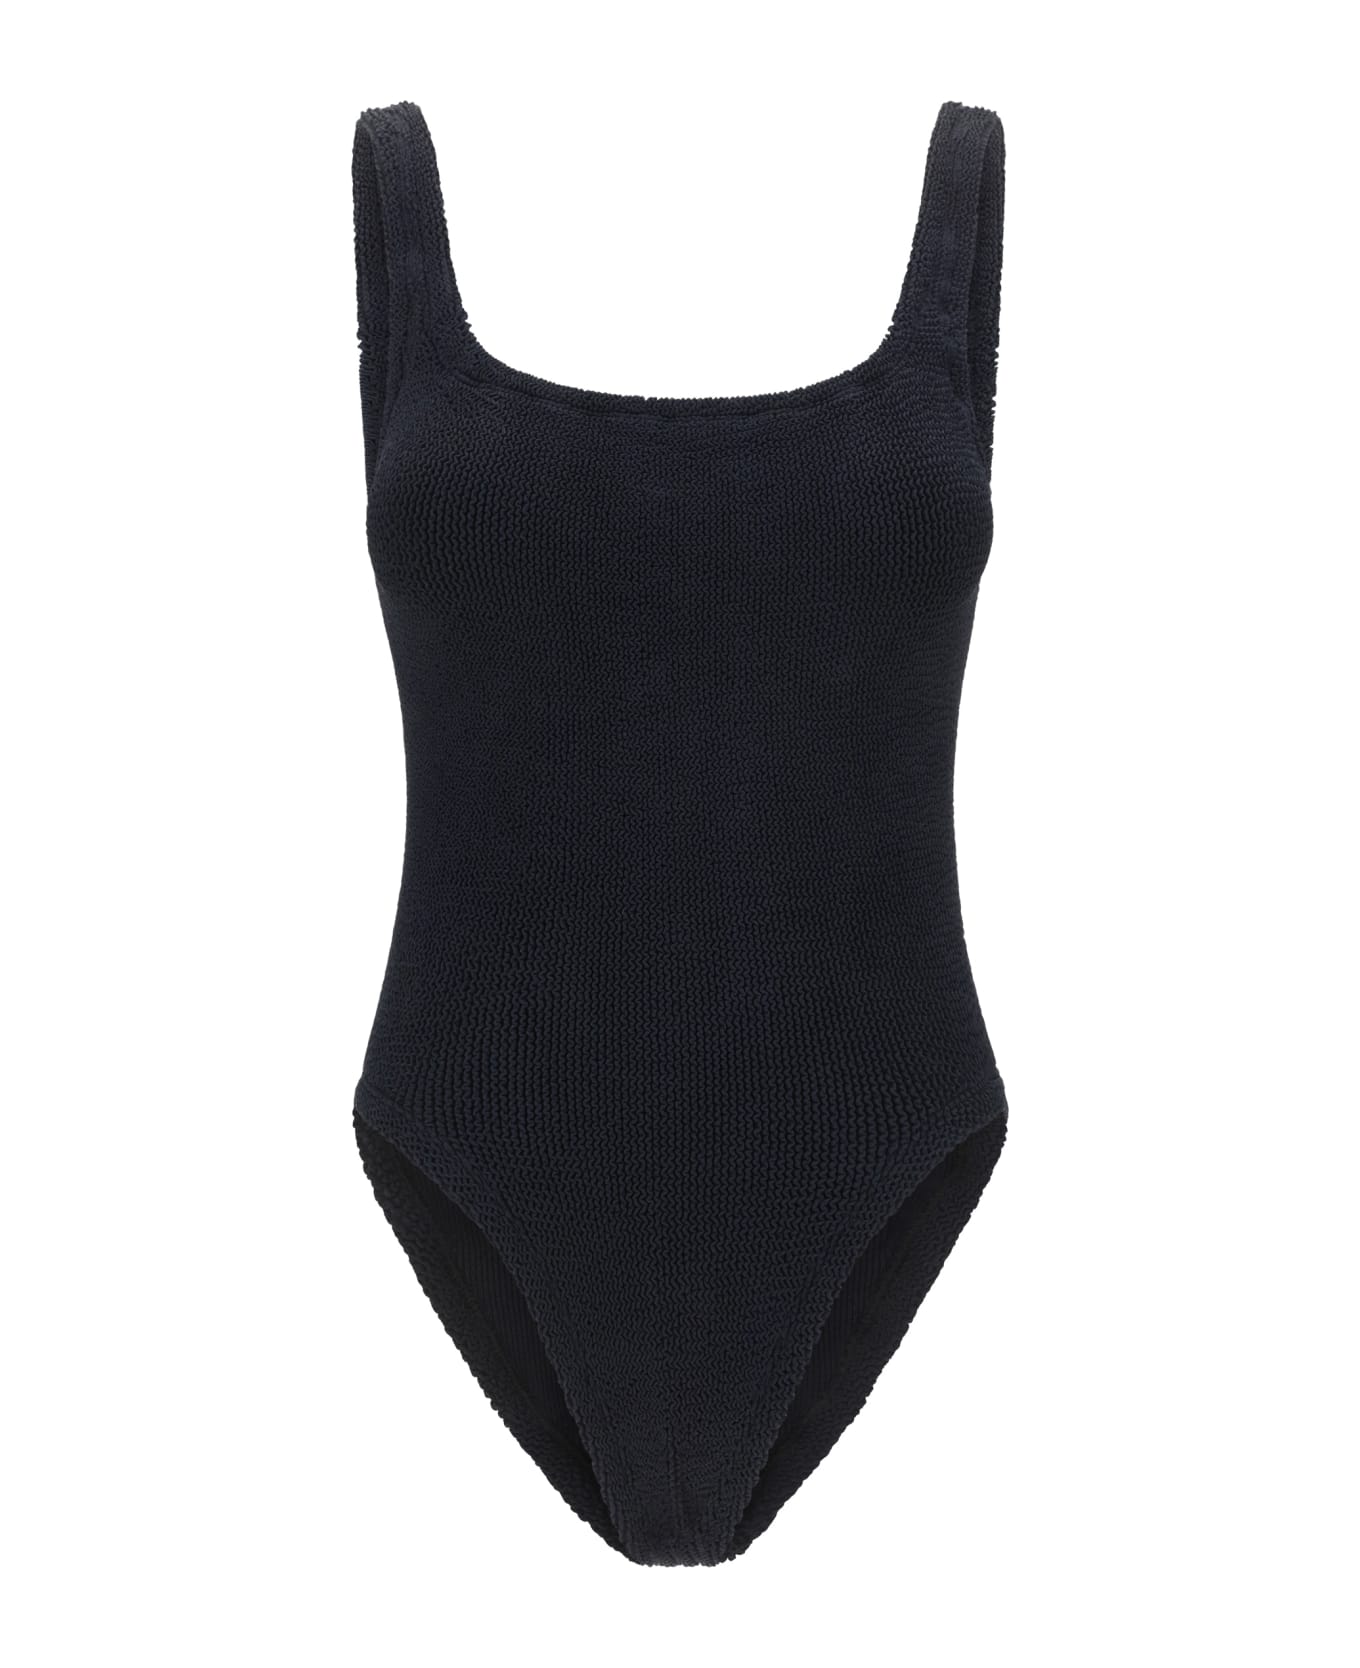 Hunza G Swimsuit - Black